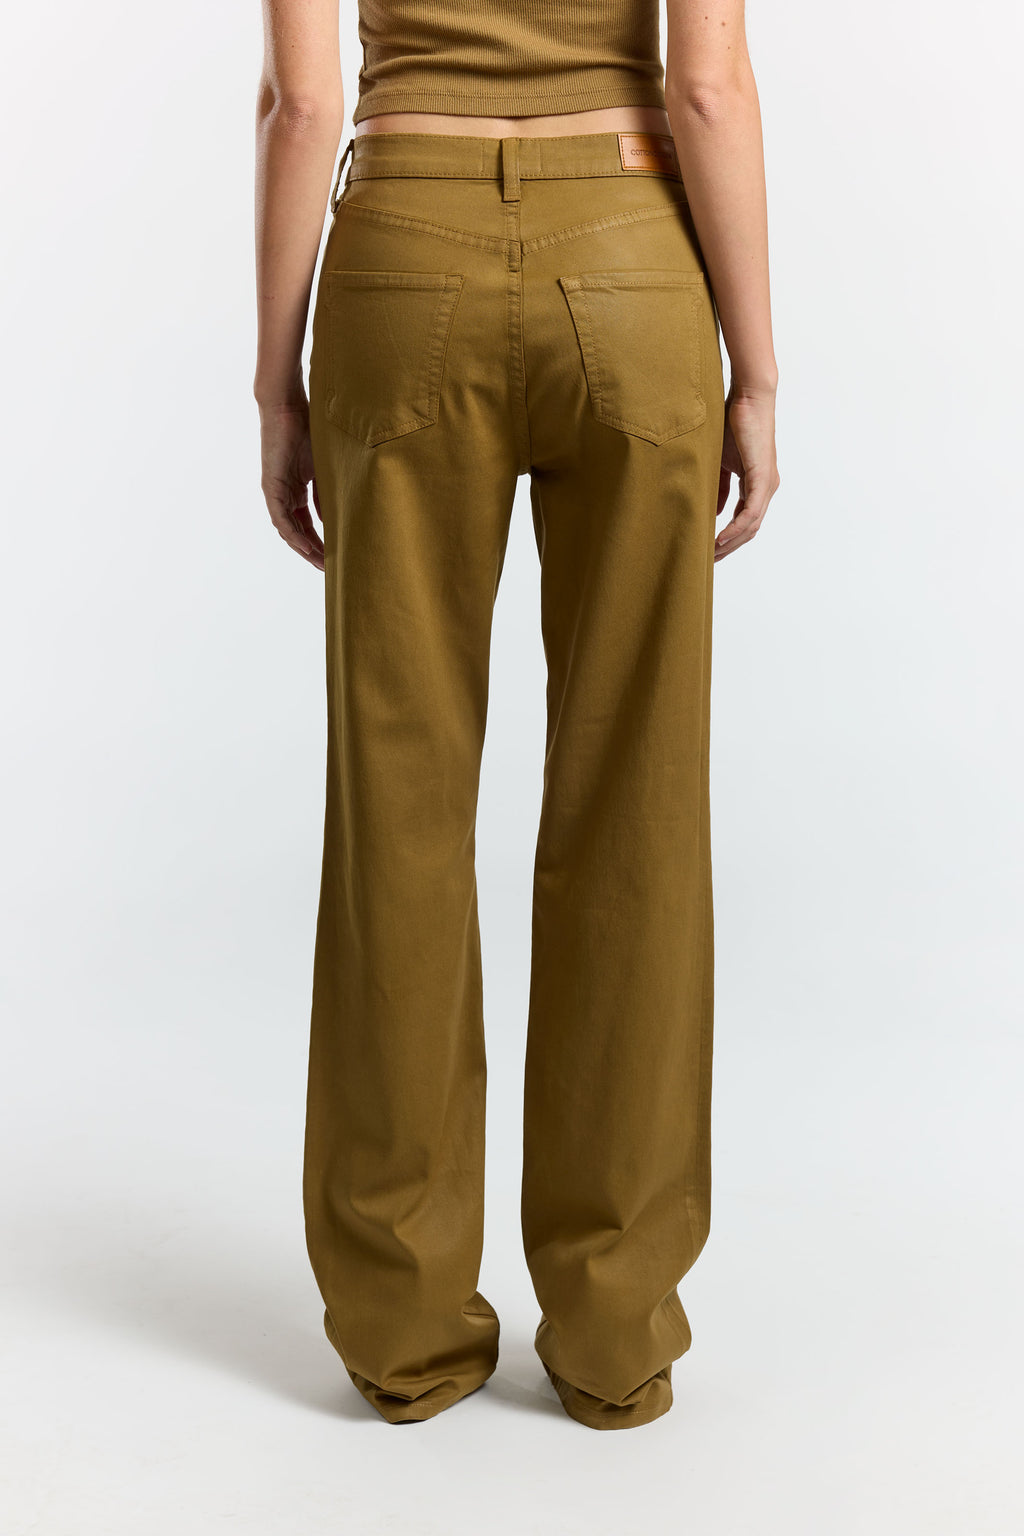 zanvin Linen Pants for Women,Clearance Womens Fashion Summer Solid Casual  Pocket Elastic Waist Long Pants Cargo Pants Women